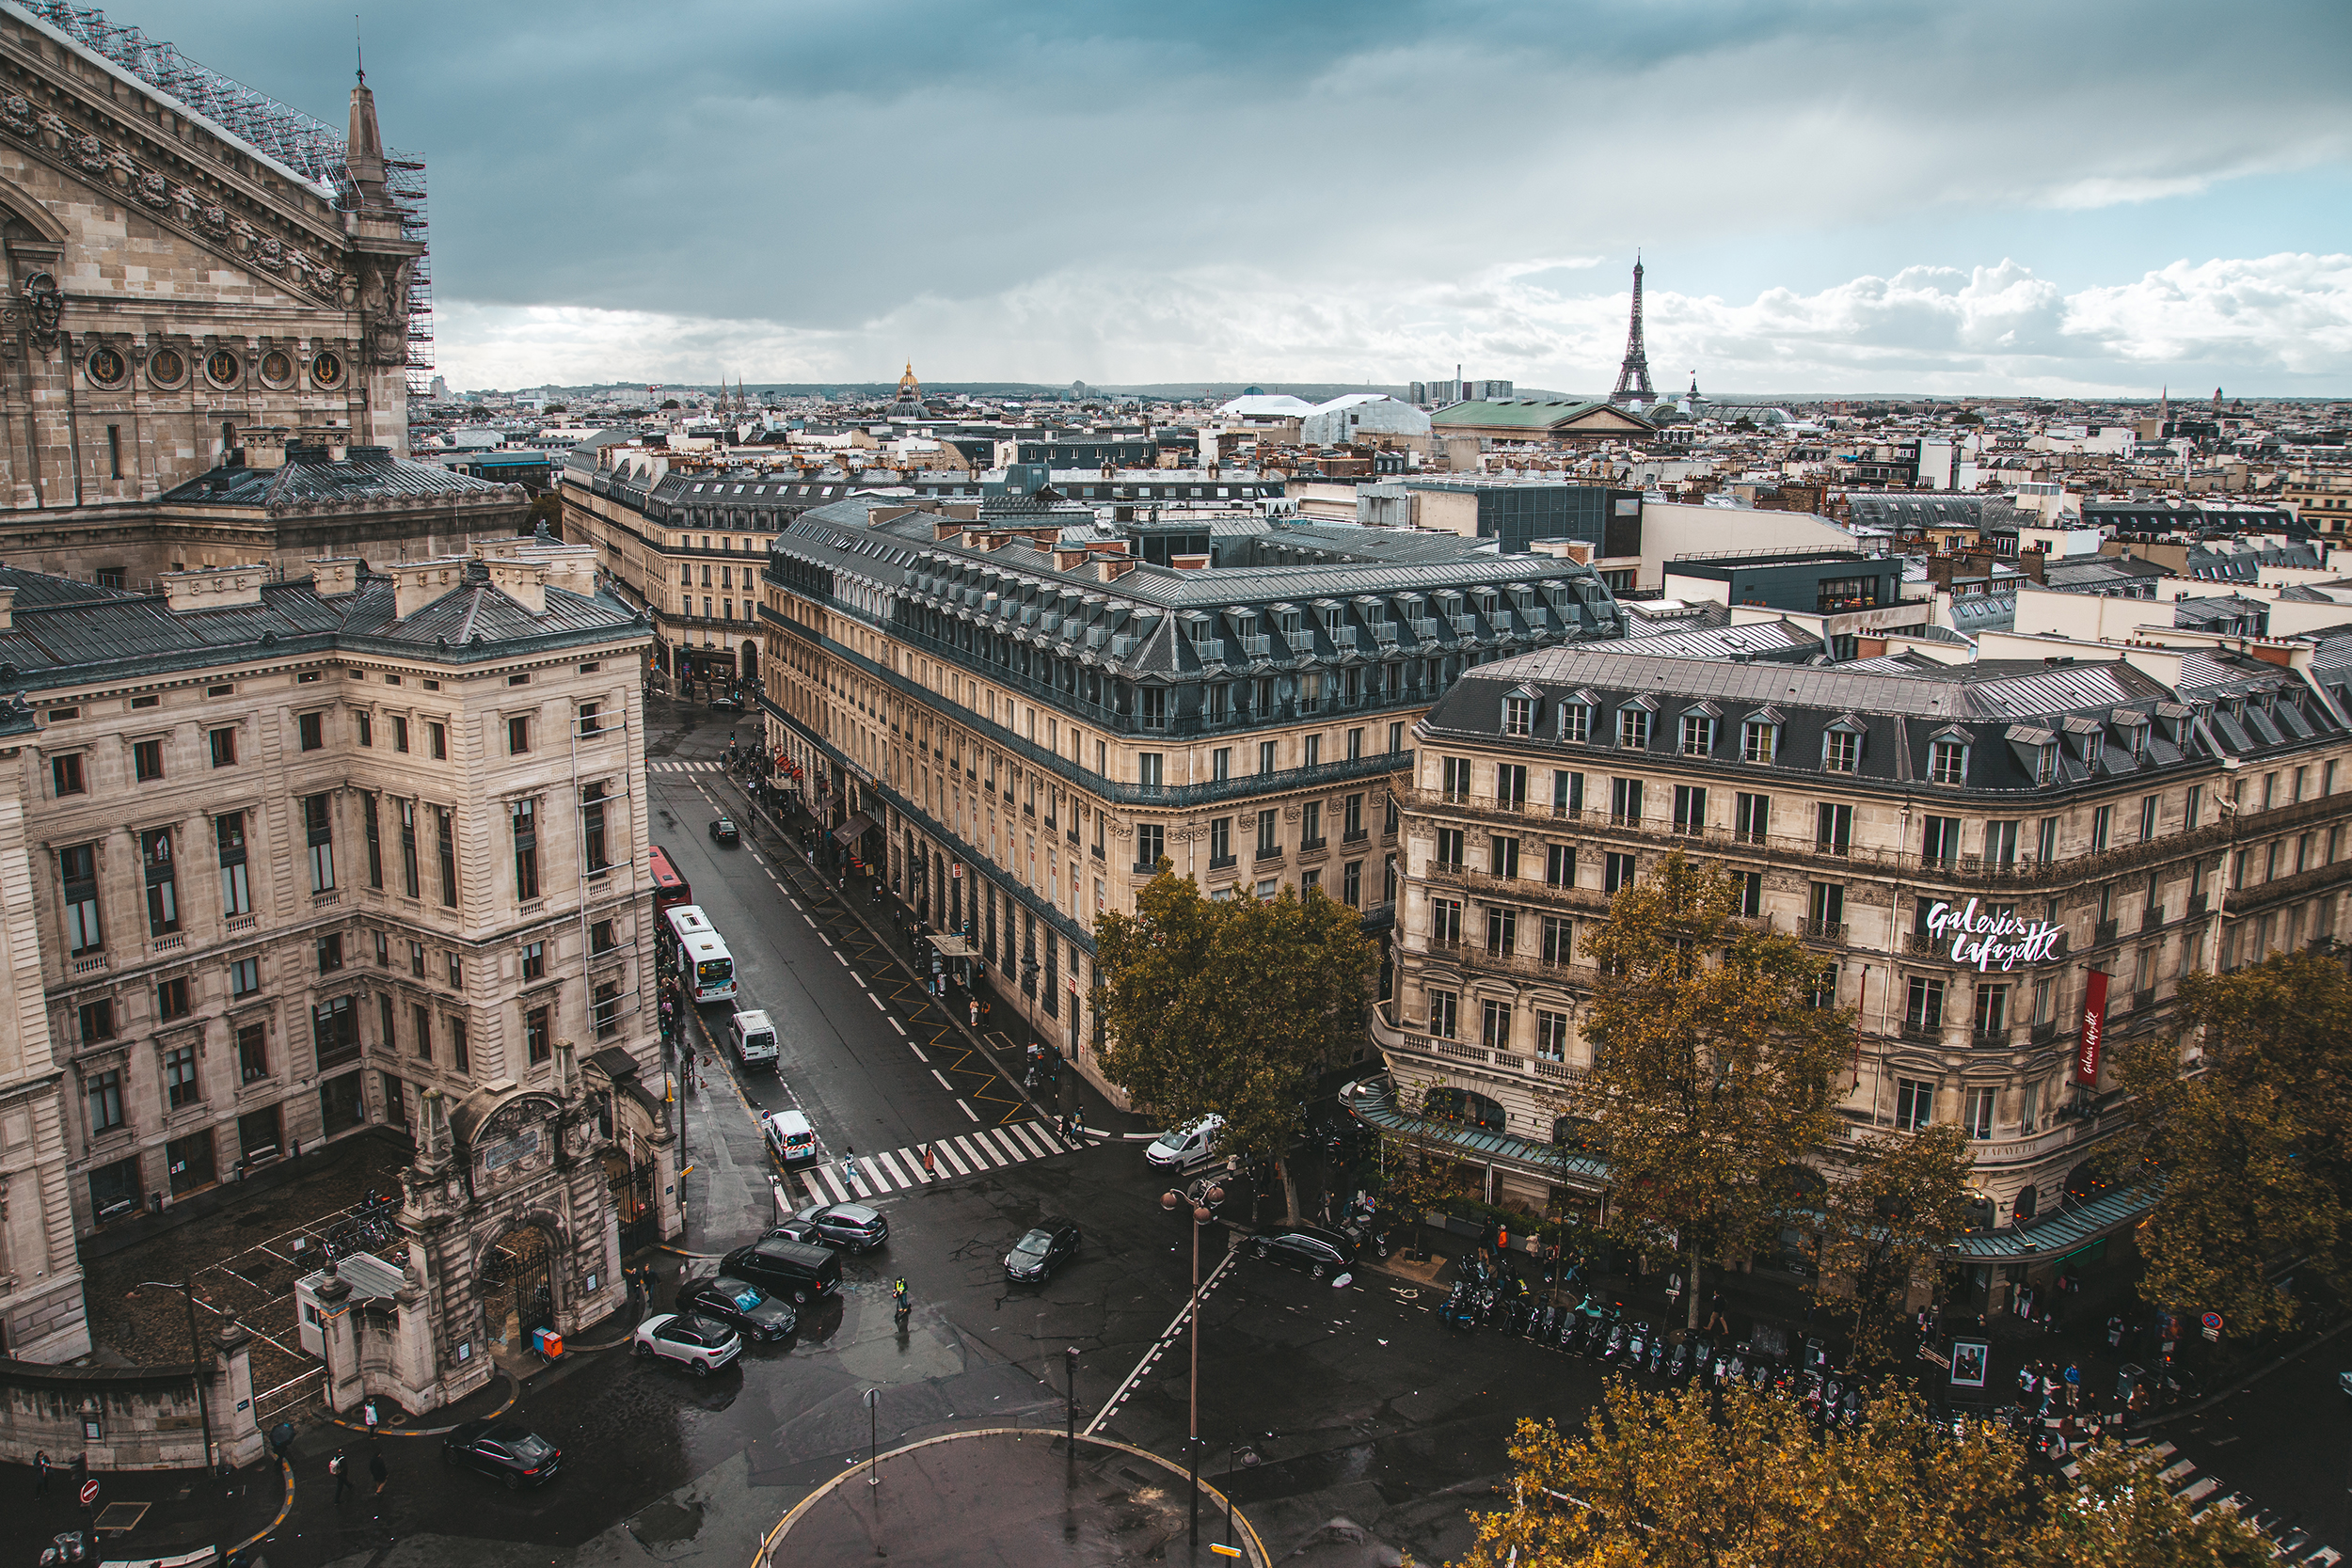 Paris Viewpoint III  
© Marielle Janotta - My Travel Island